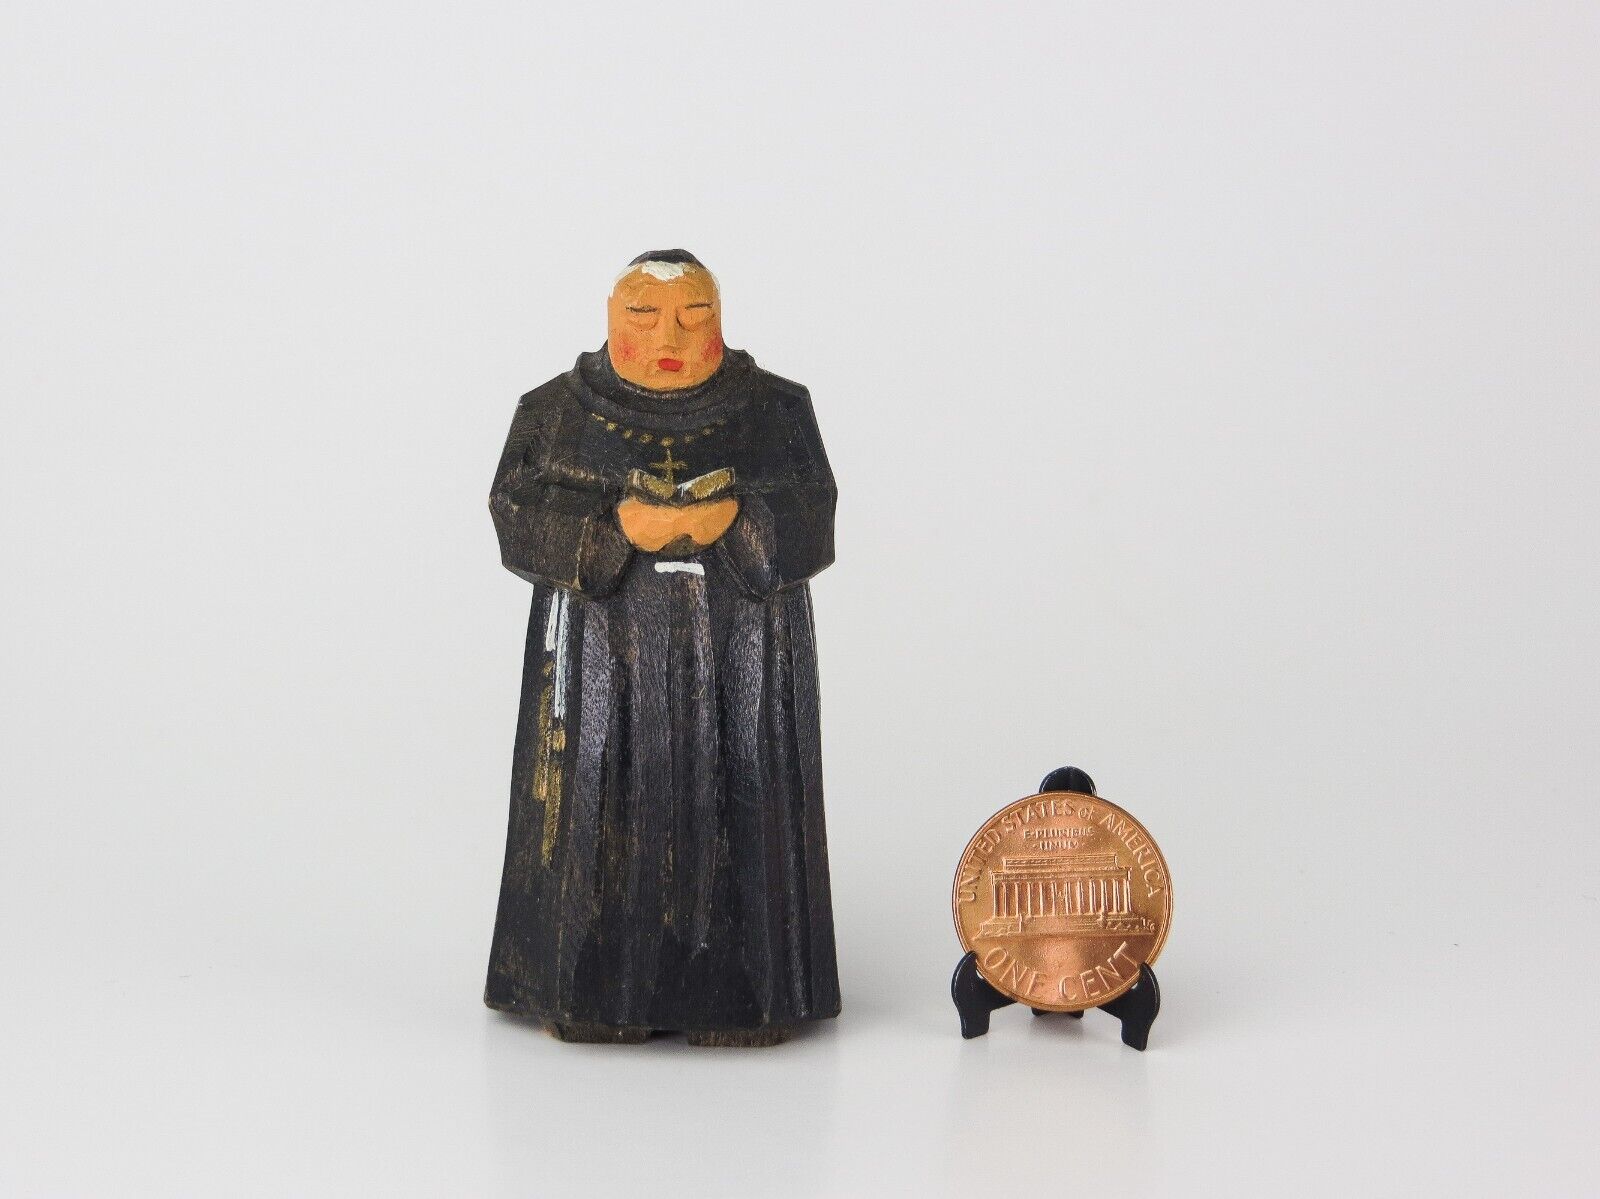 Vintage Huggler Miniature Carved Woodn Monk Figurine, Made in Switzerland